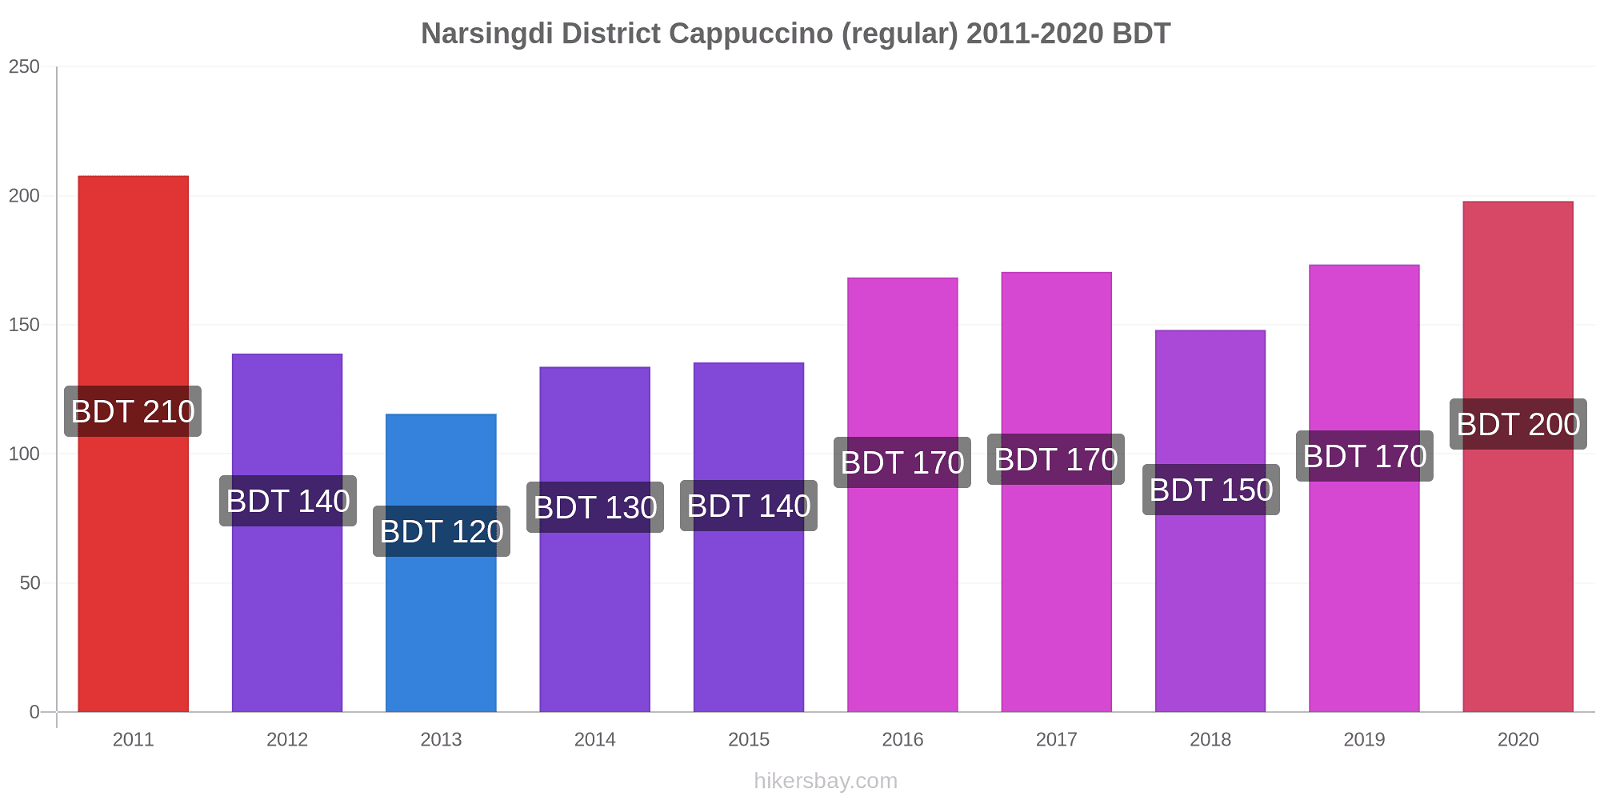 Narsingdi District price changes Cappuccino (regular) hikersbay.com